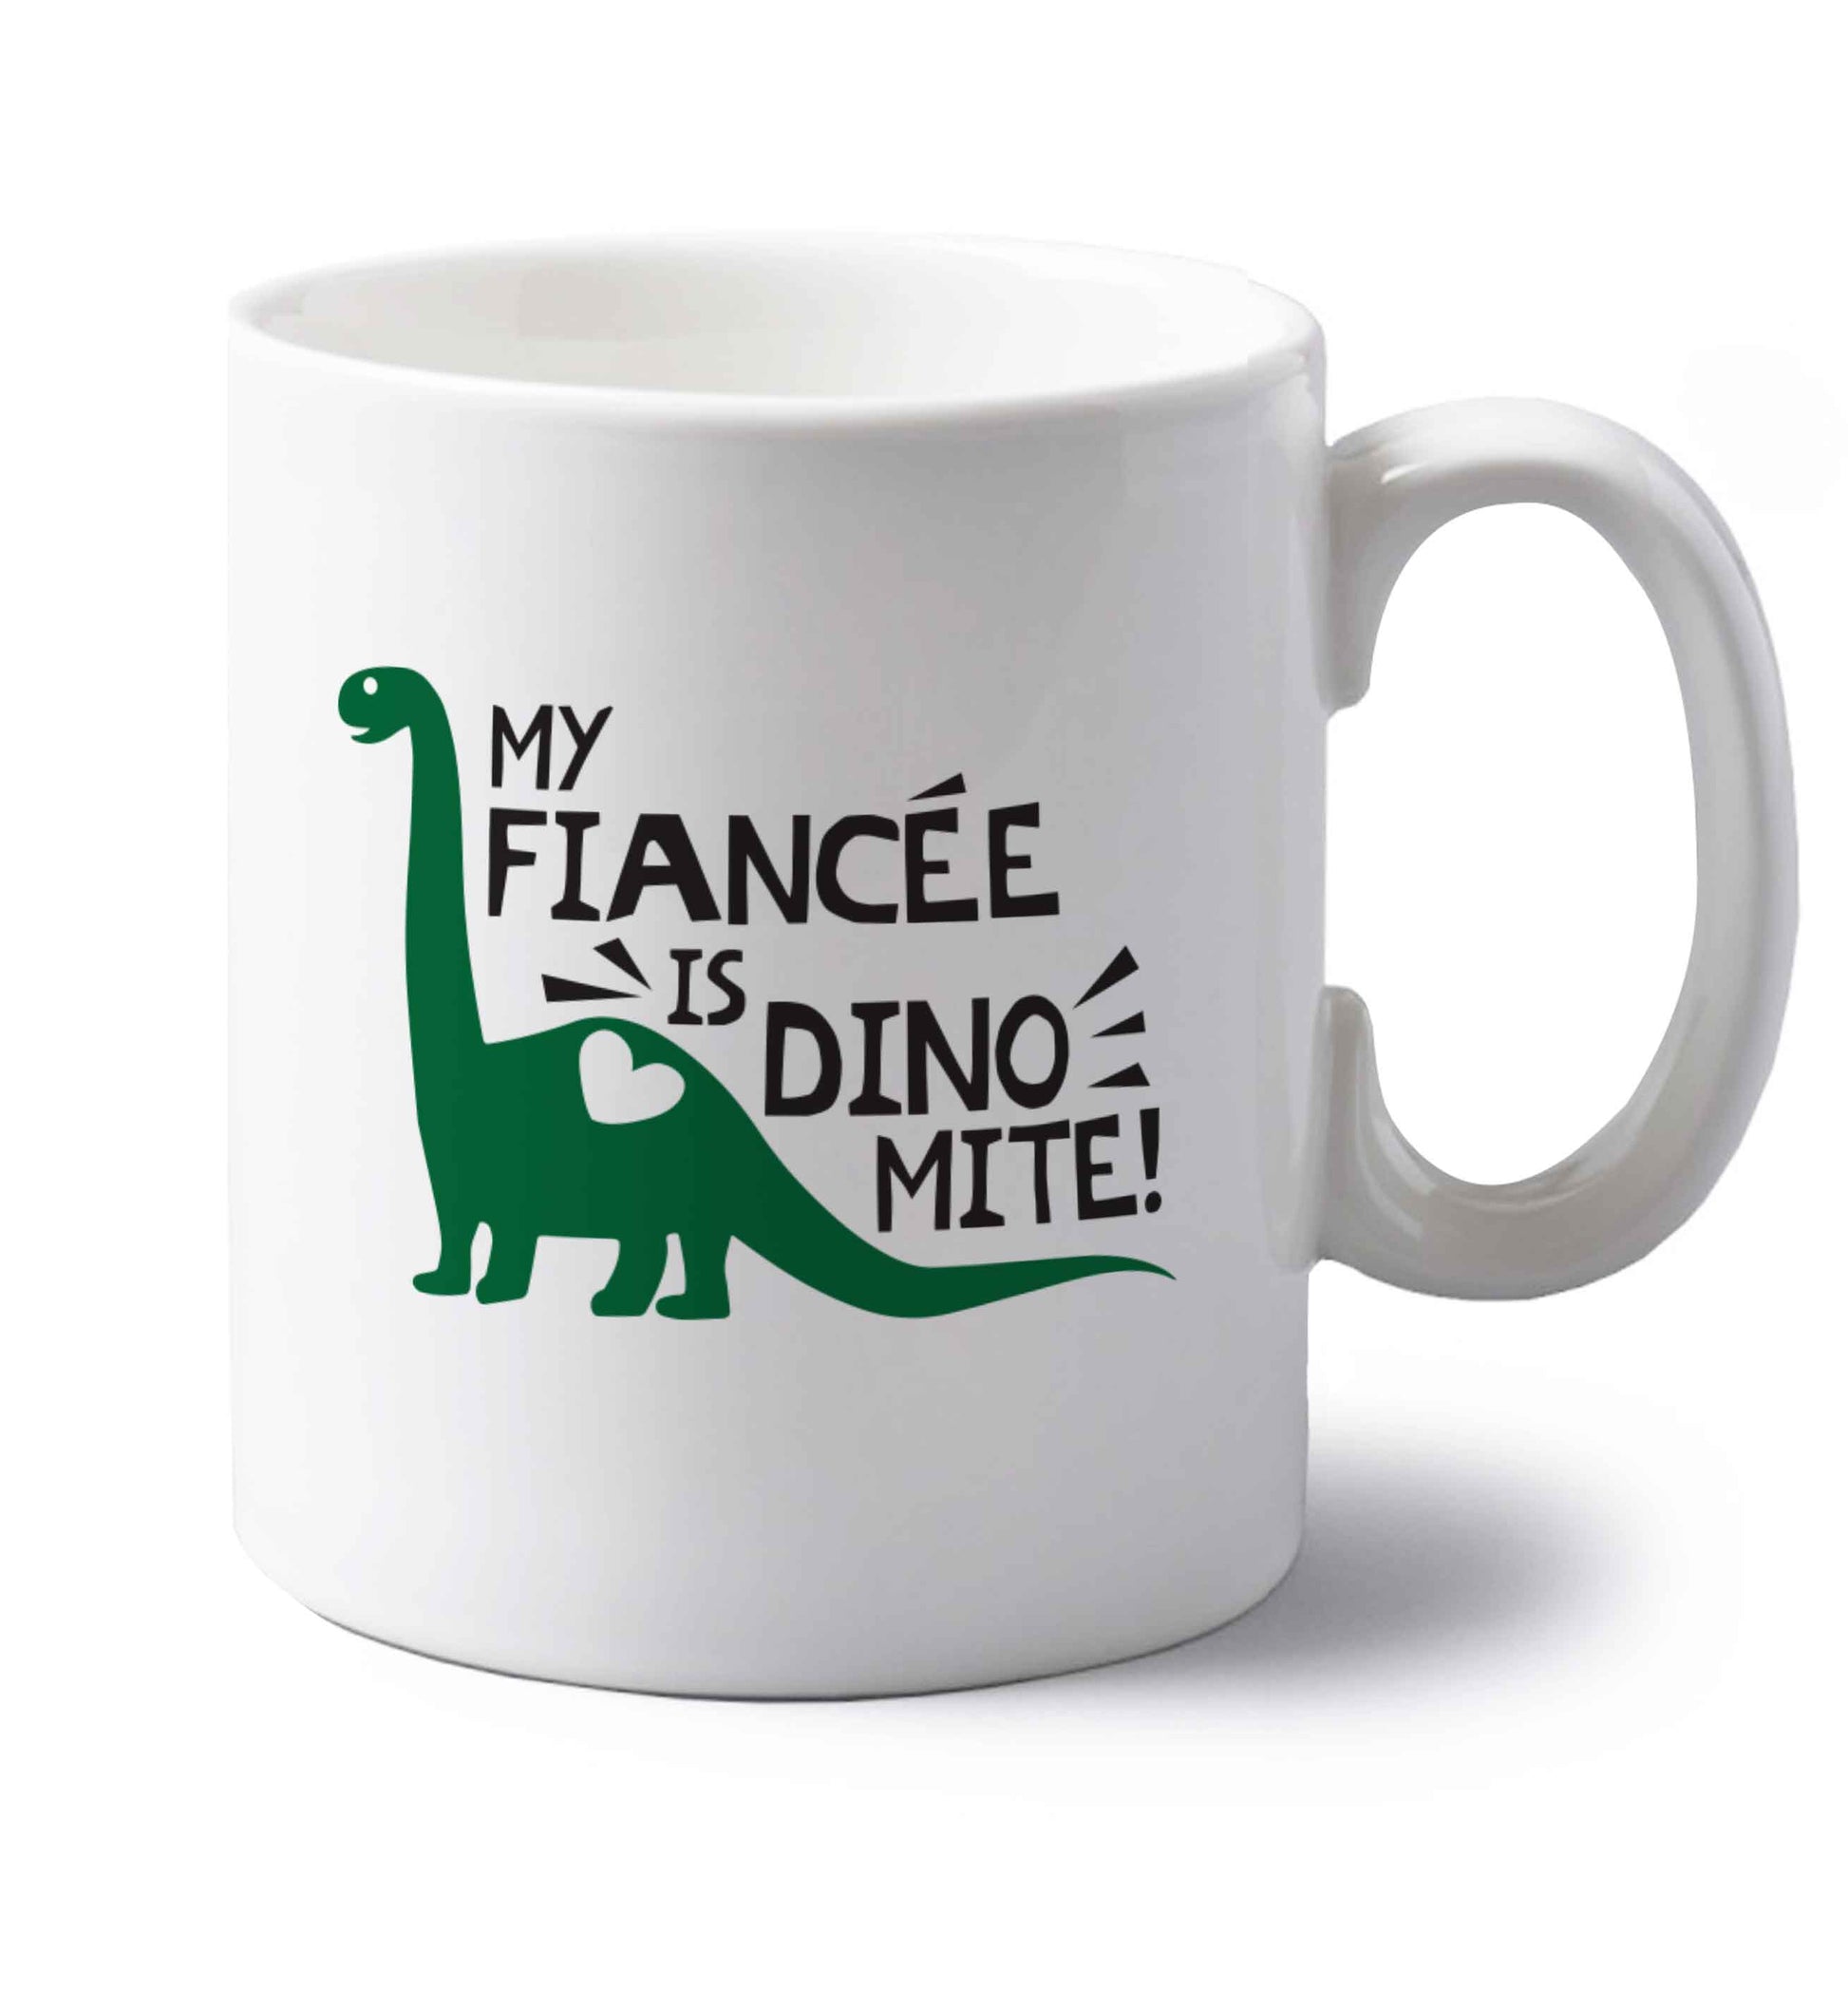 My fiancee is dinomite! left handed white ceramic mug 